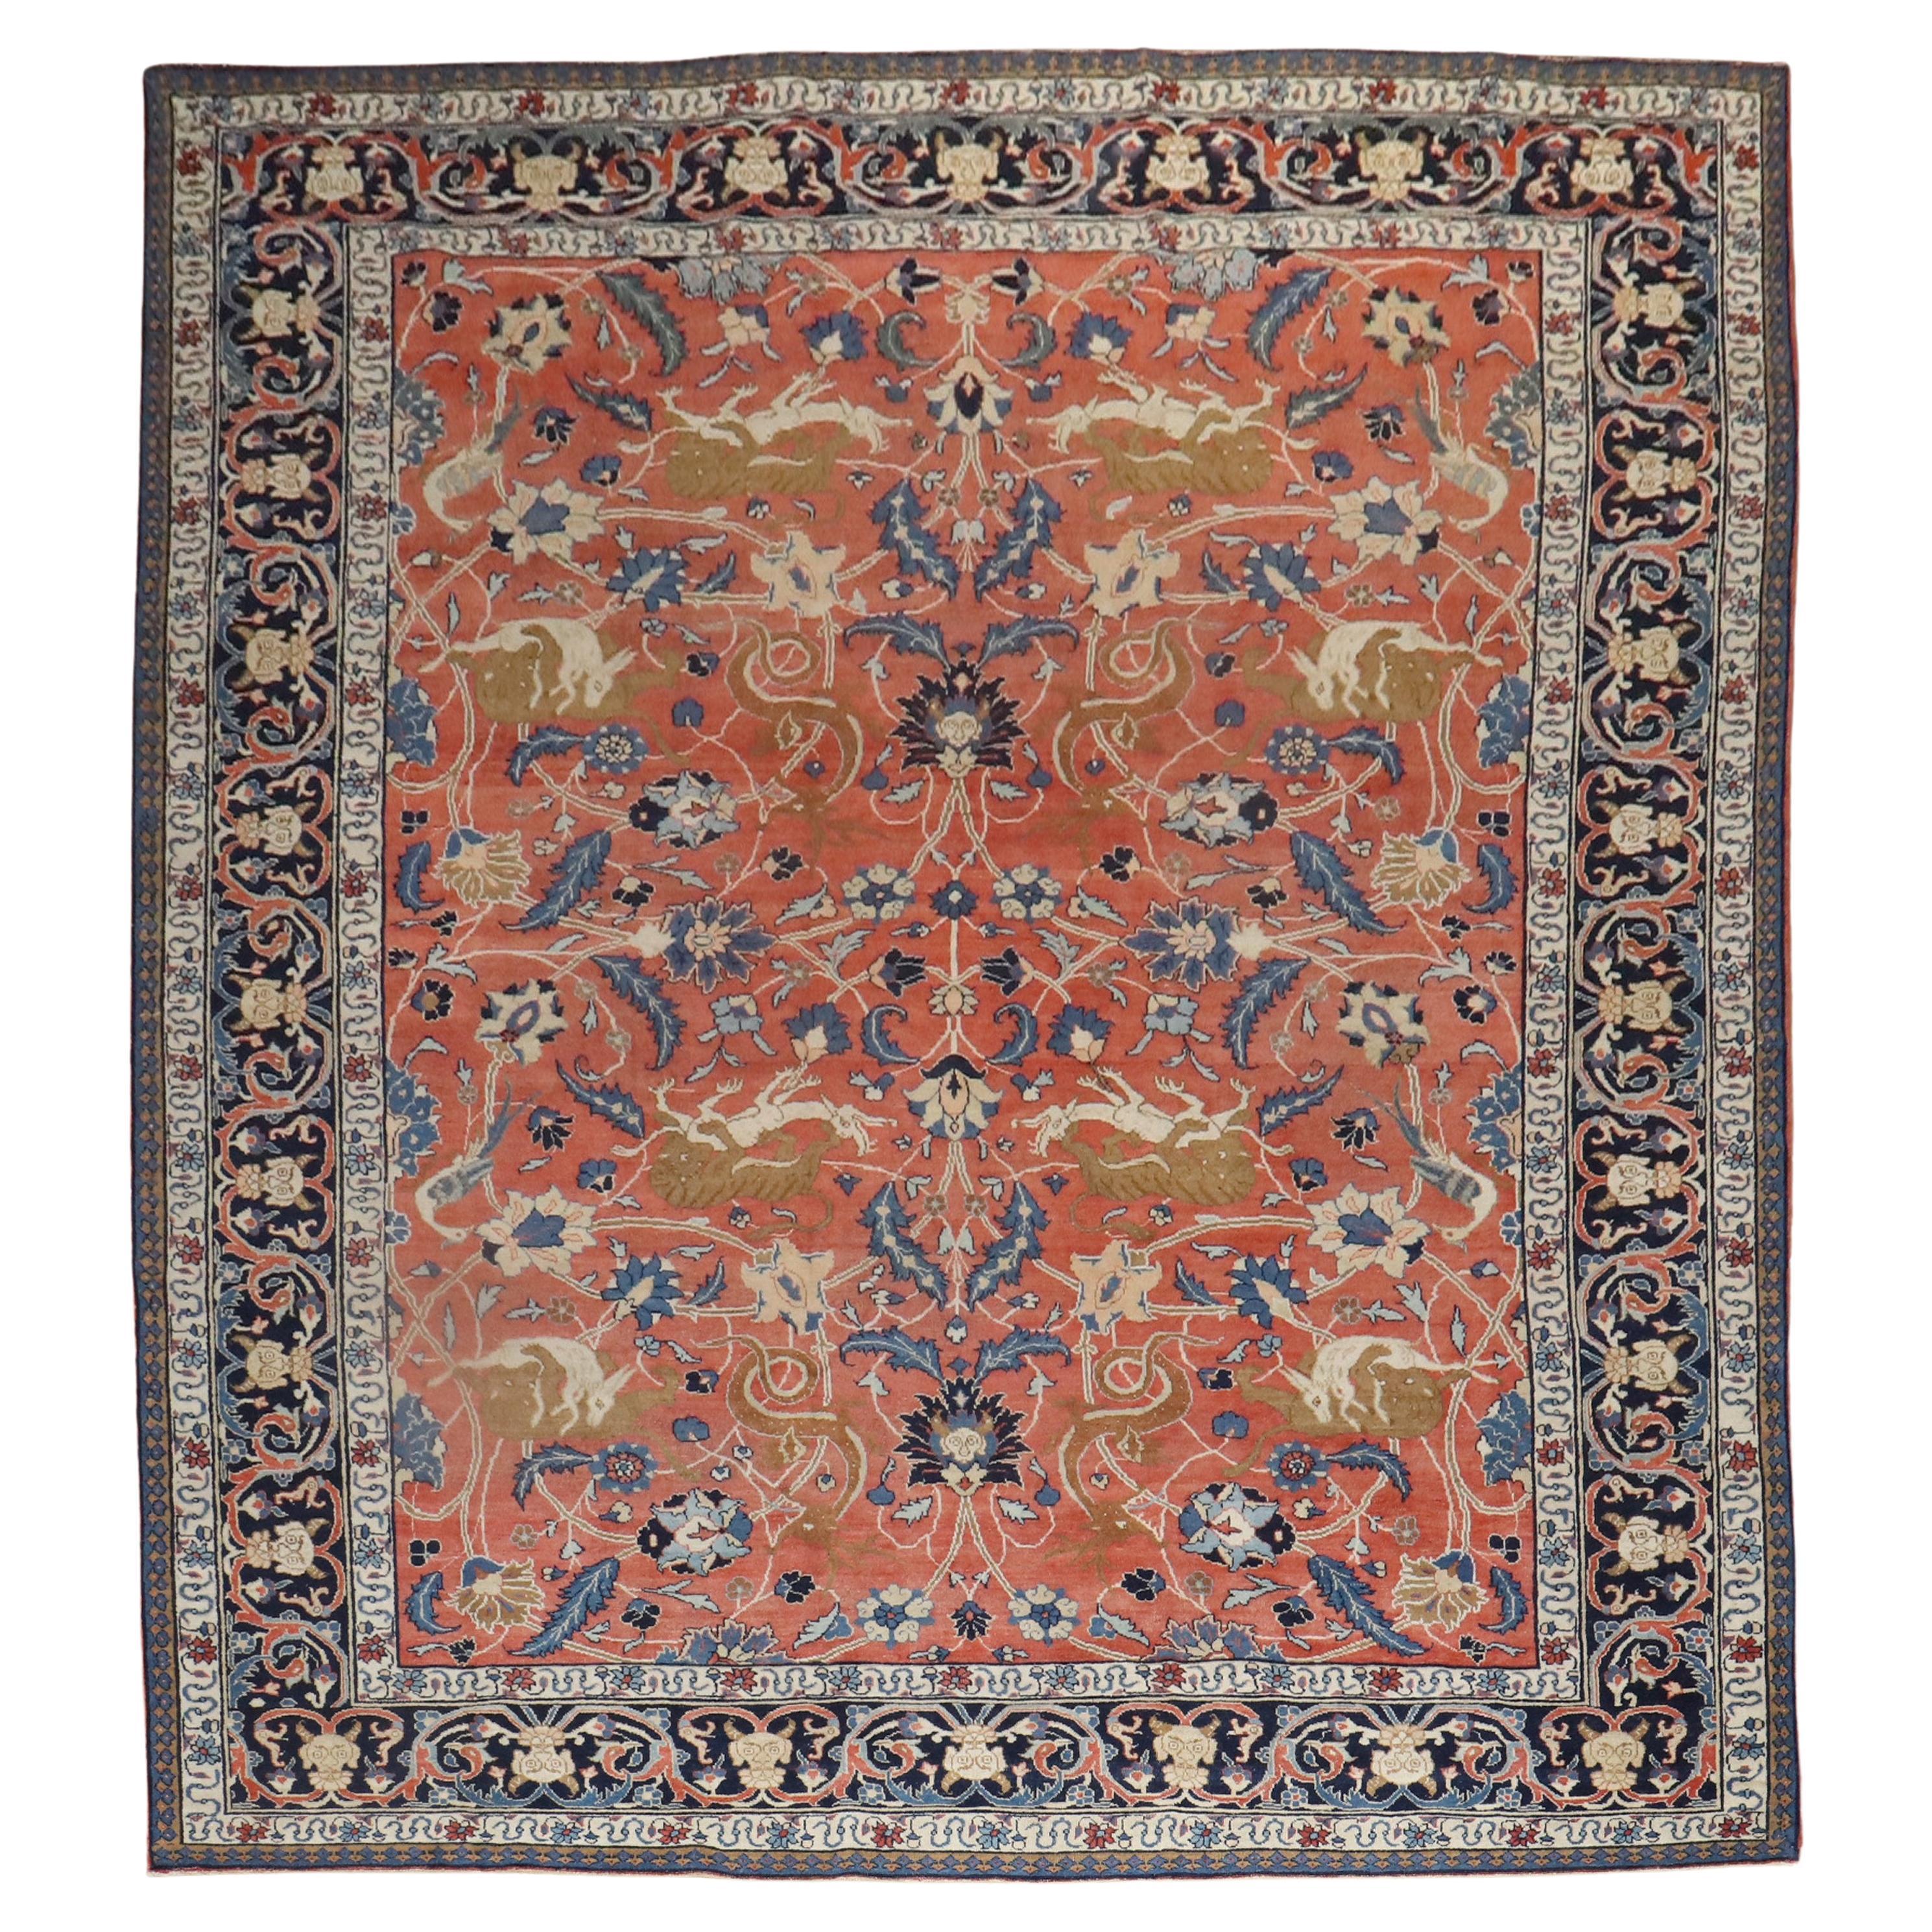 How do I identify a Tabriz rug?